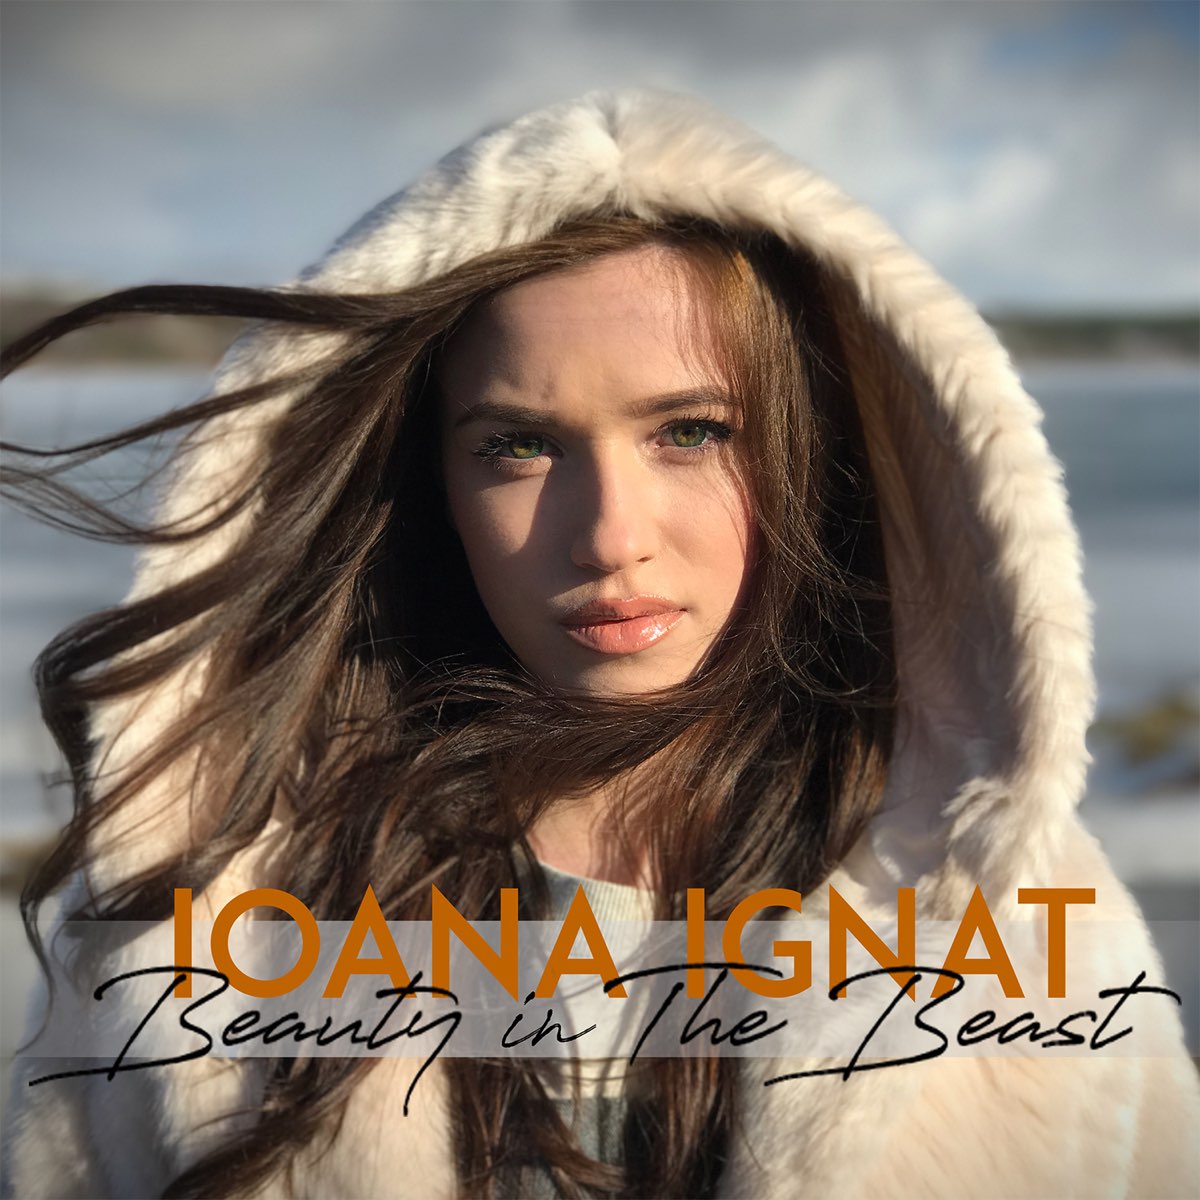 Beautiful girls песня. Певица Ioana Ignat. Ioana Ignat биография. Певец песни beautiful girls.